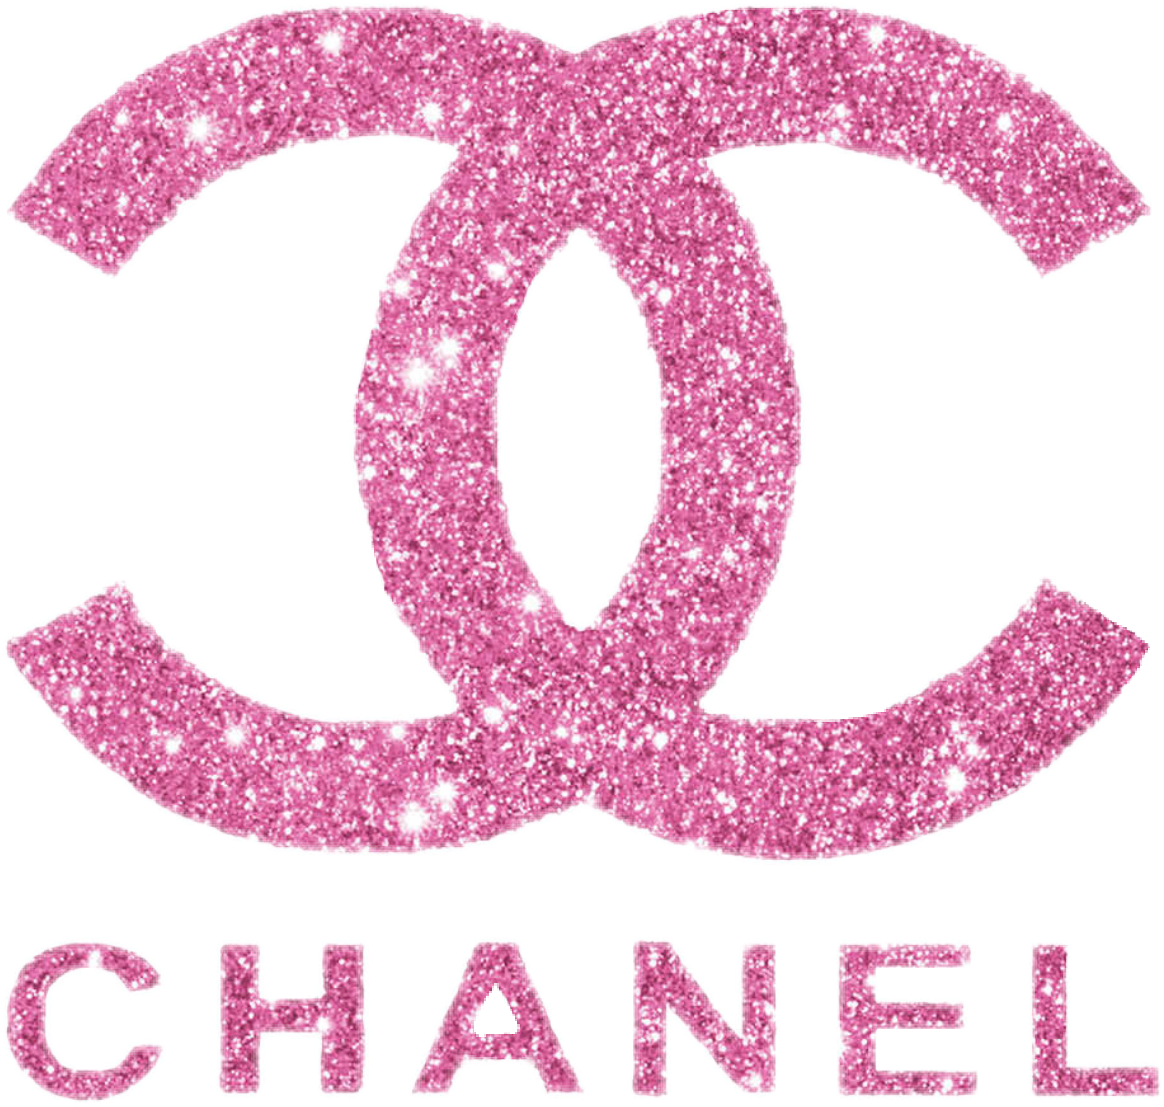 Chanel Logo PNG Image File